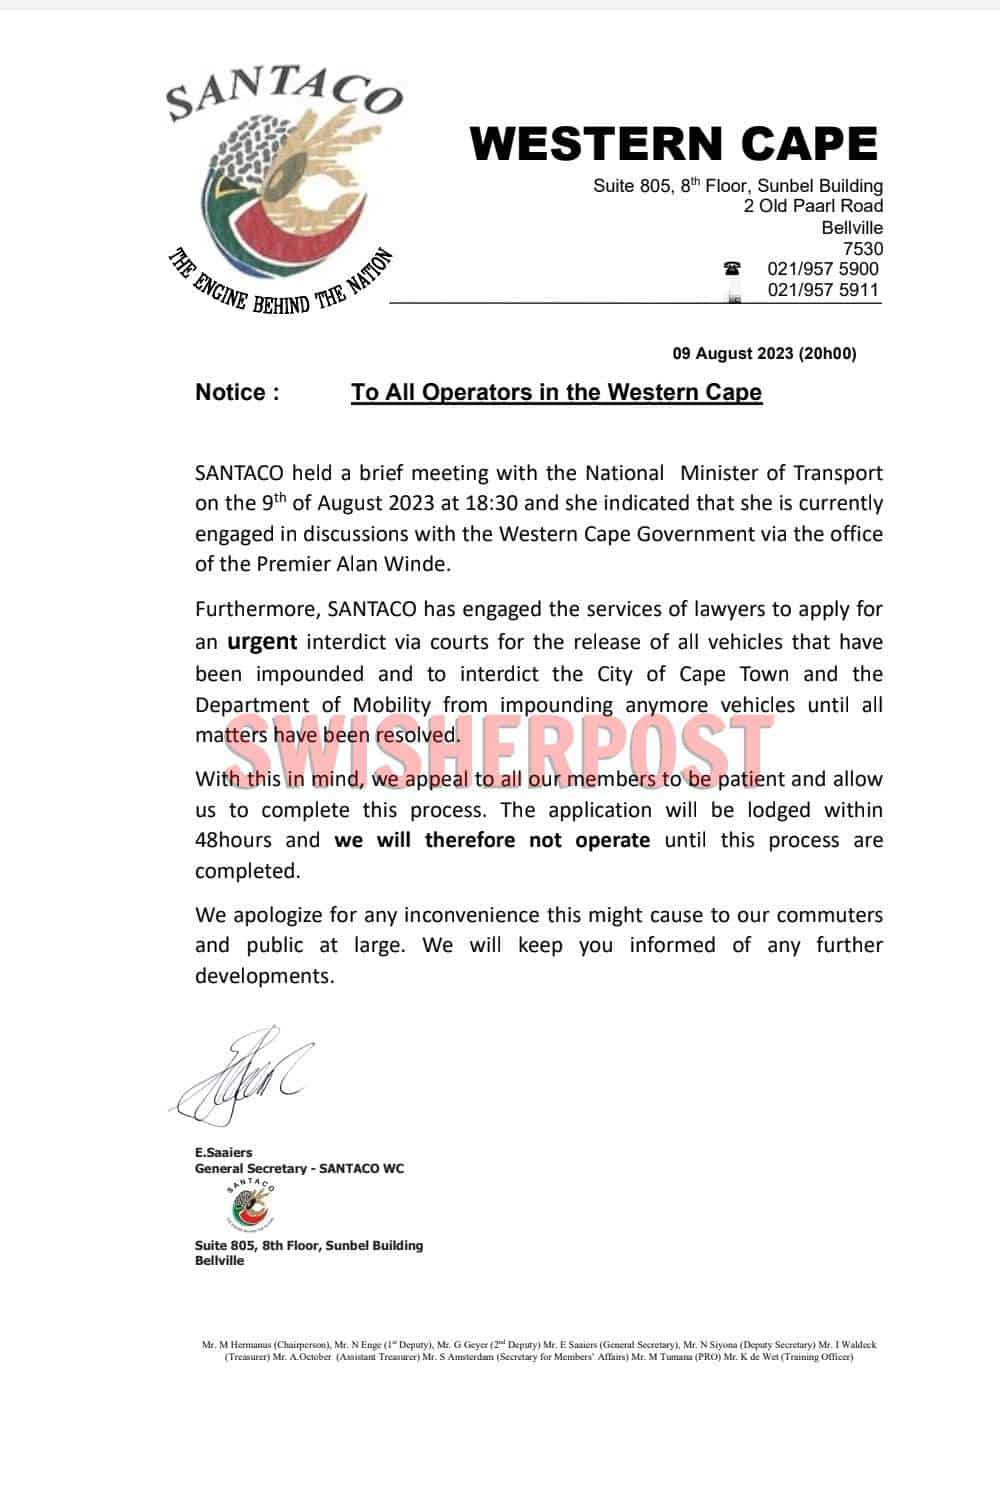 SANTACO statement cape town taxis Thursday 10 august 2023 strike